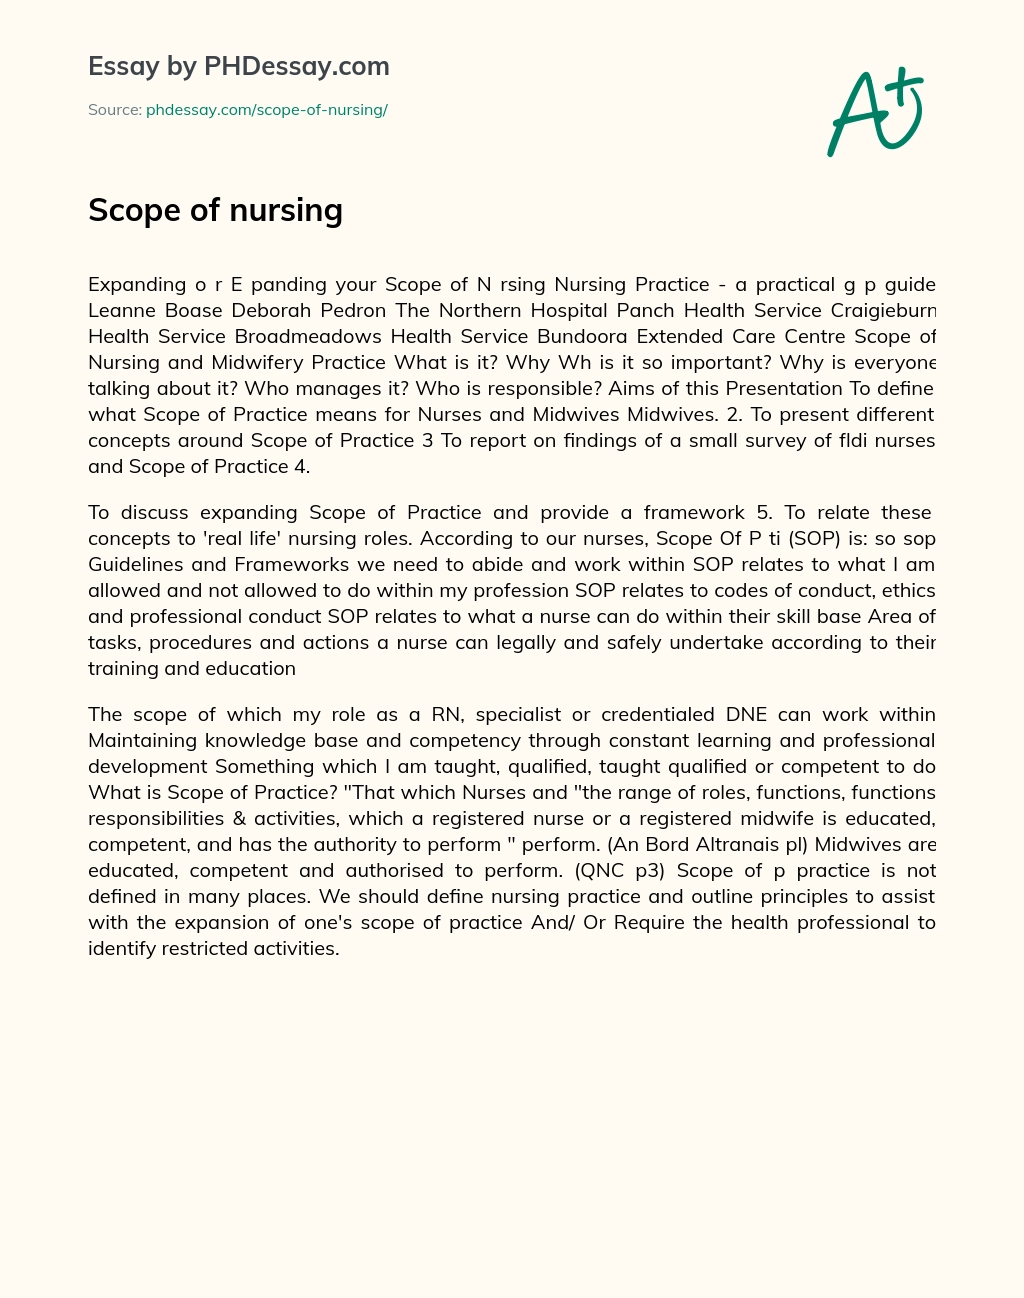 Scope of nursing essay